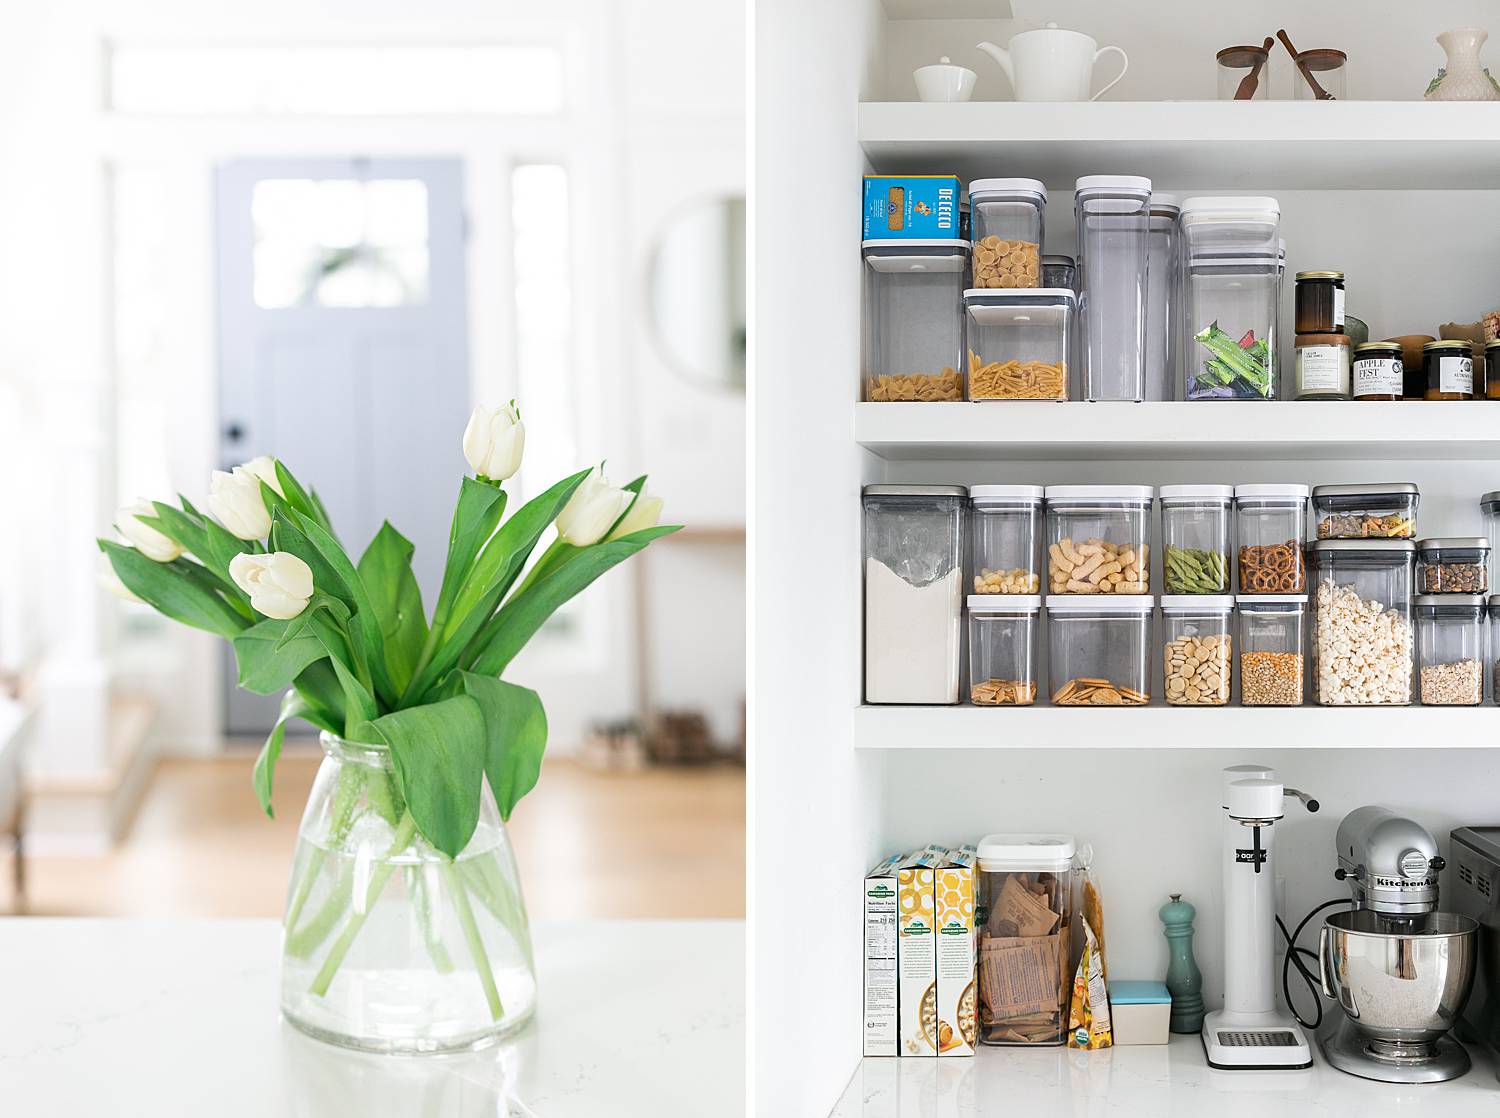 kitchen shelves neatly organized and fresh white tulips in vase